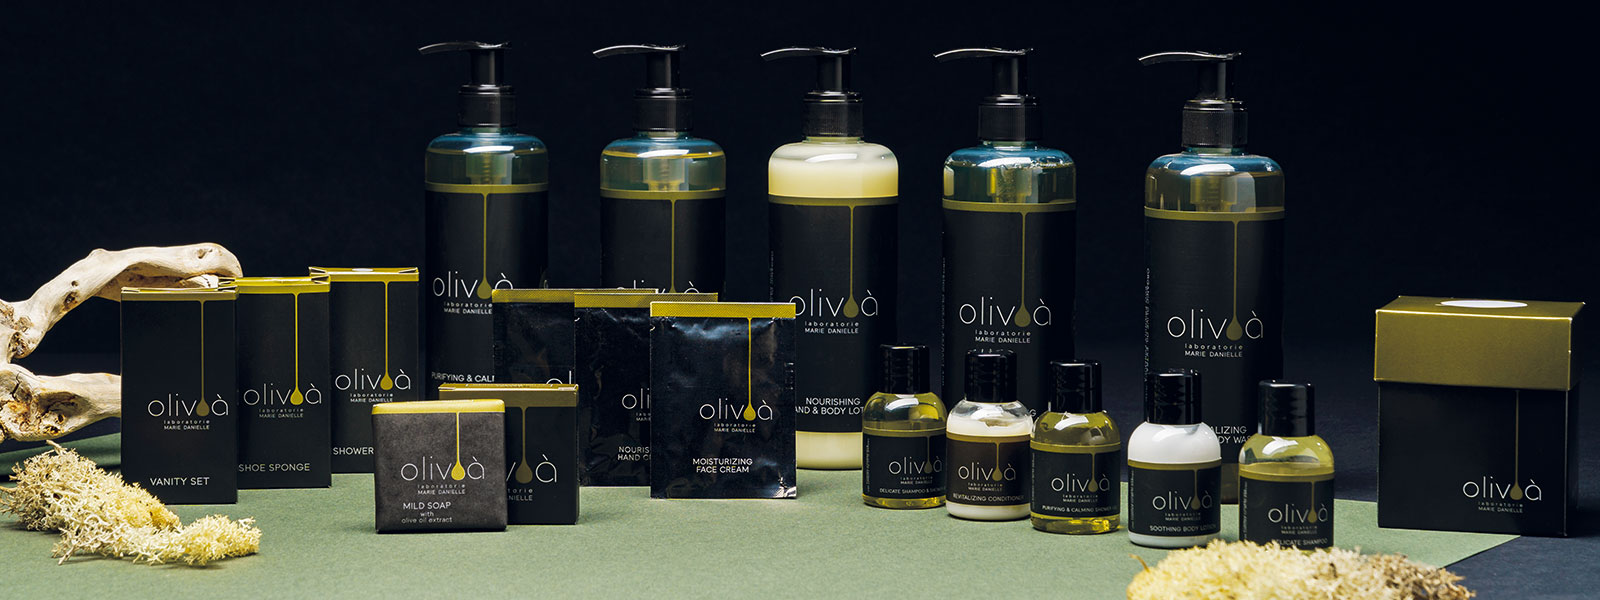 oliva olivà marie danielle